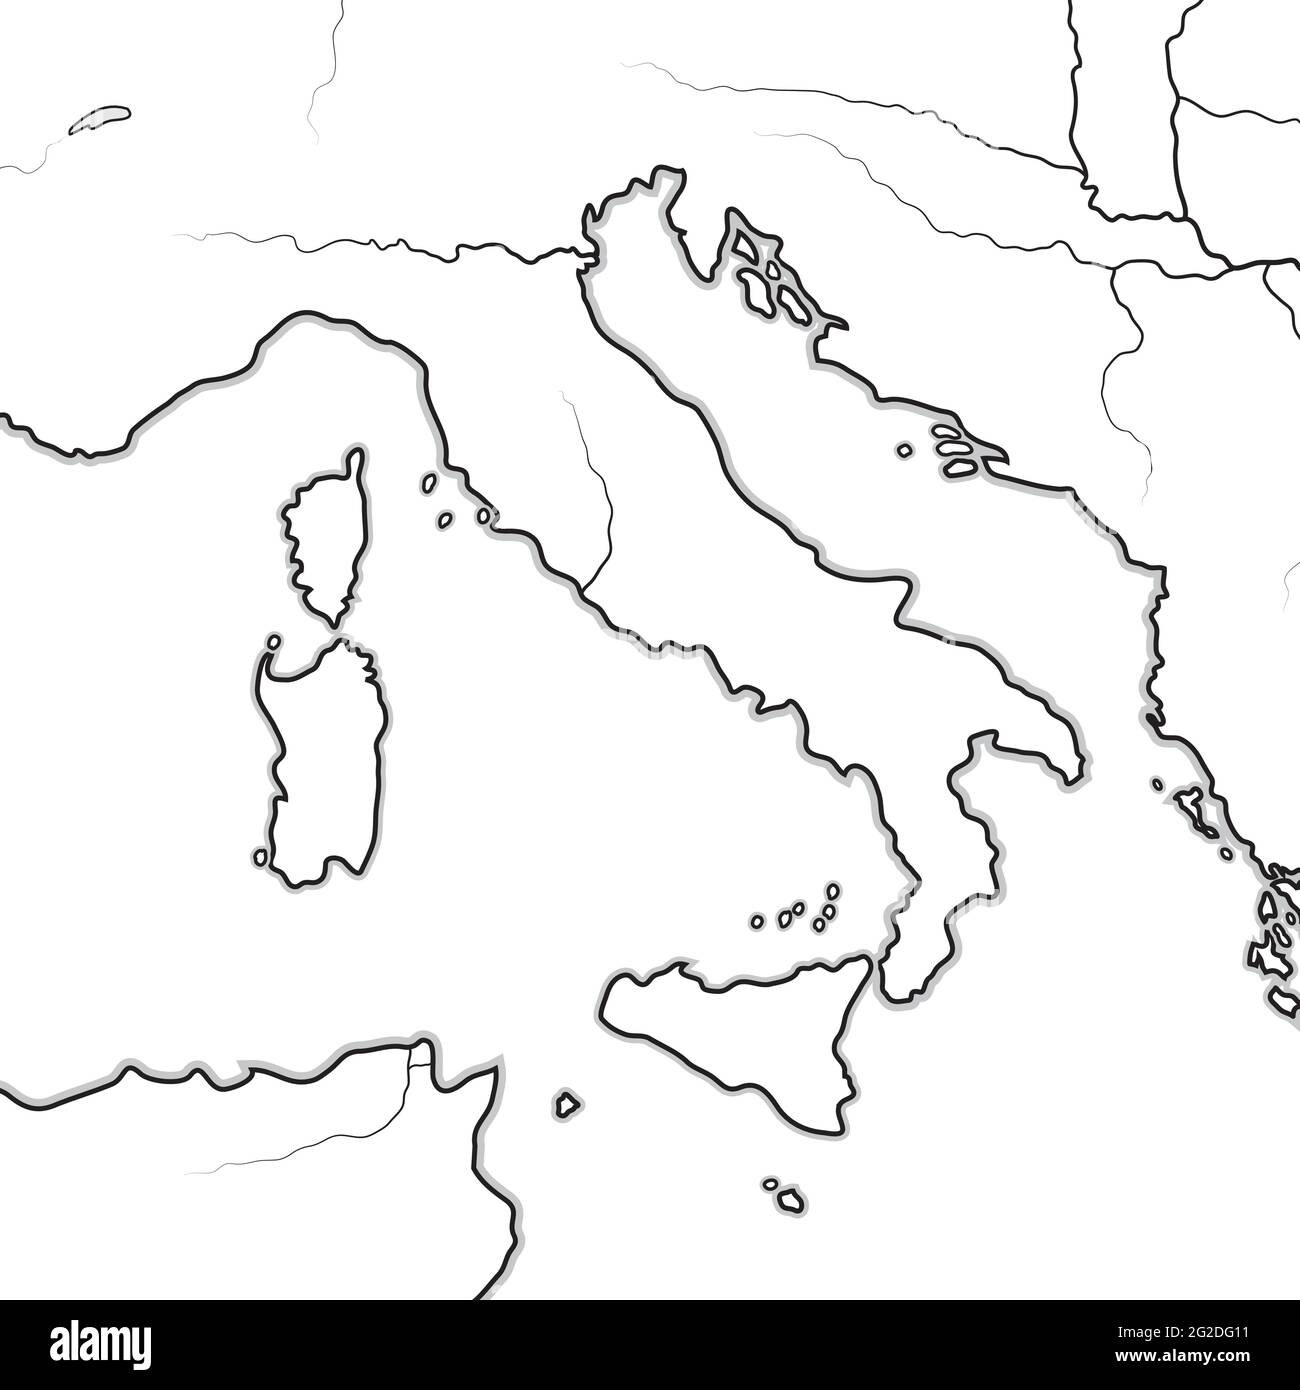 Map of The ITALIAN Lands: Italy, Tuscany, Lombardy, Sicily, The Apennines, Italian Peninsula. Geographic chart. Stock Vector